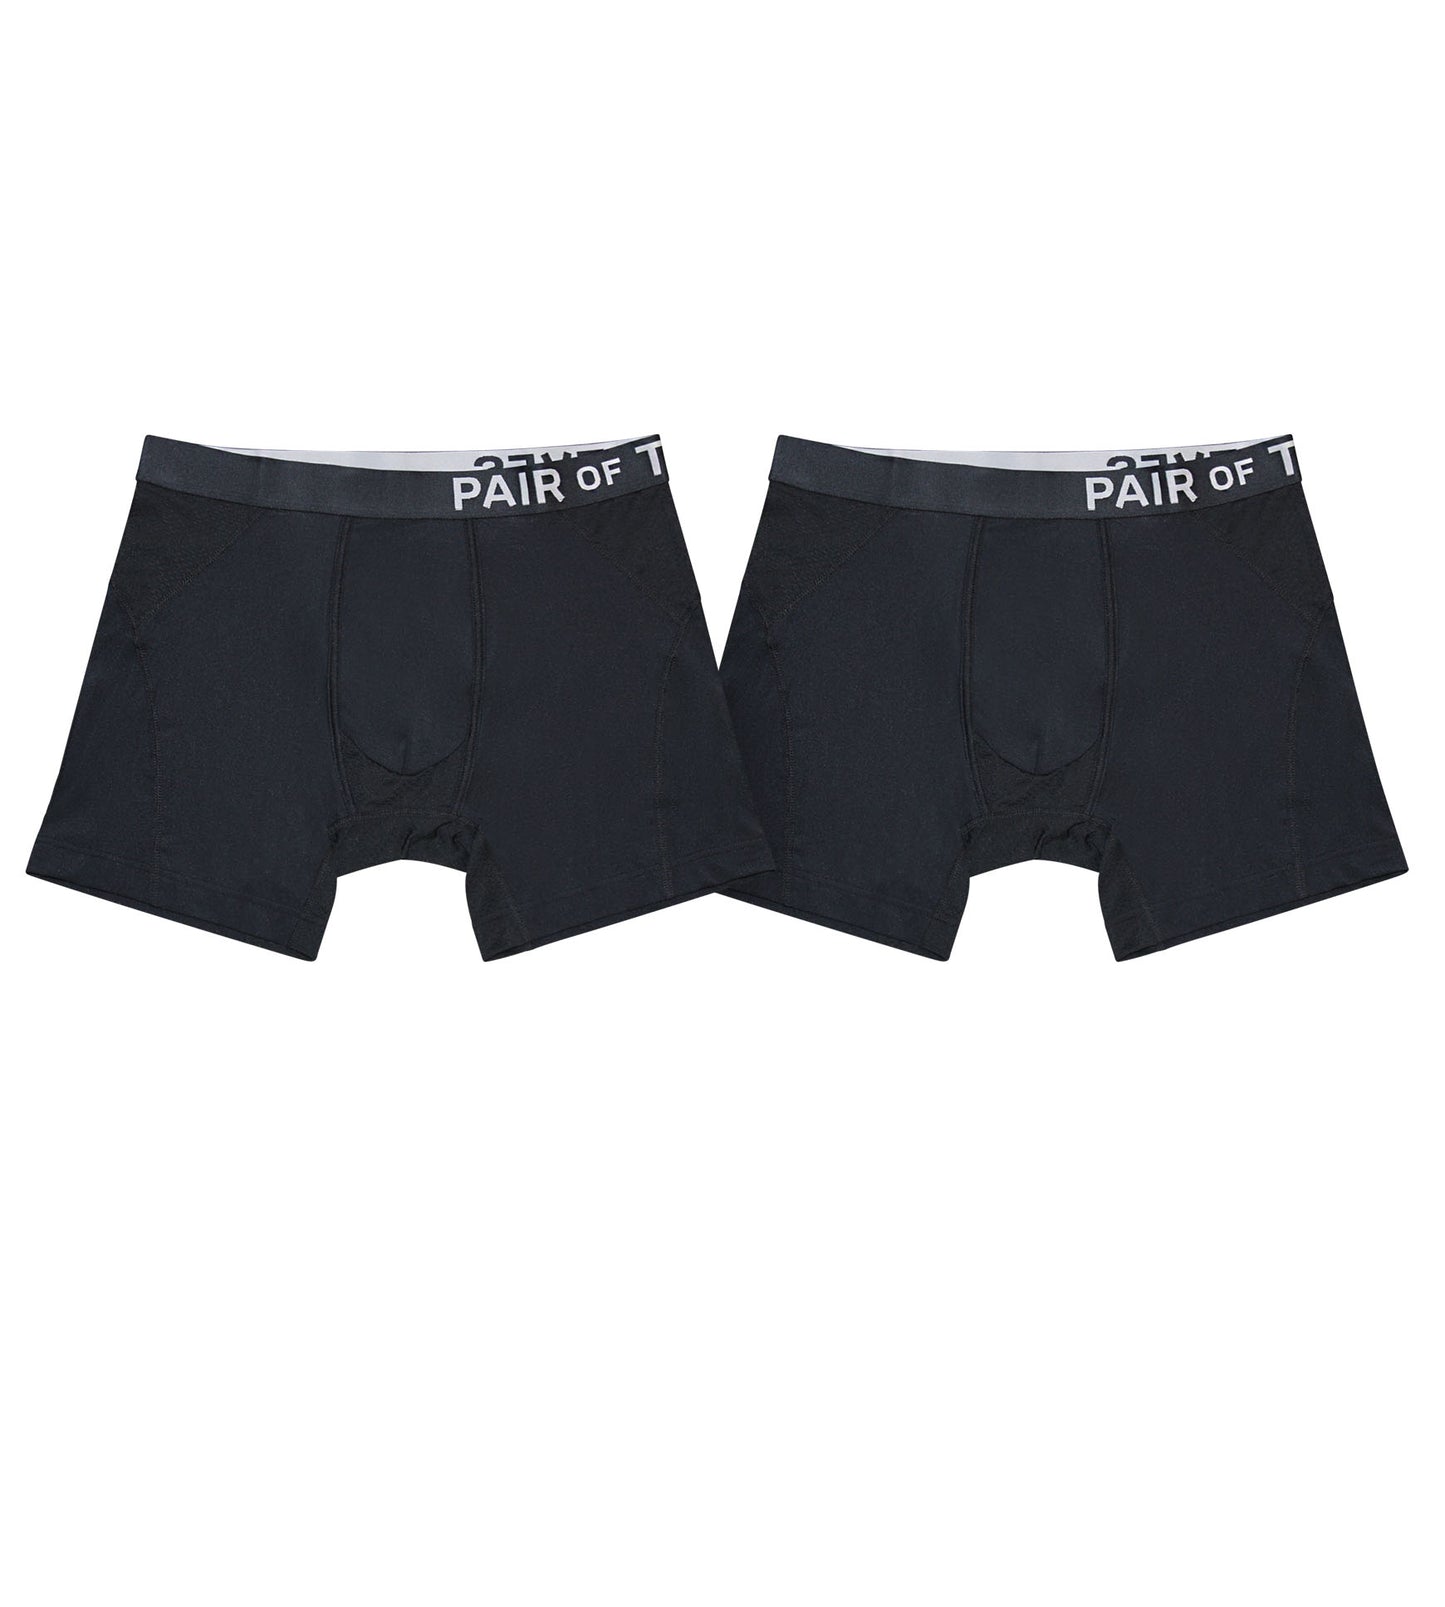 Pair of Thieves Men's 2pk Super Soft Boxer Briefs - Black/White M